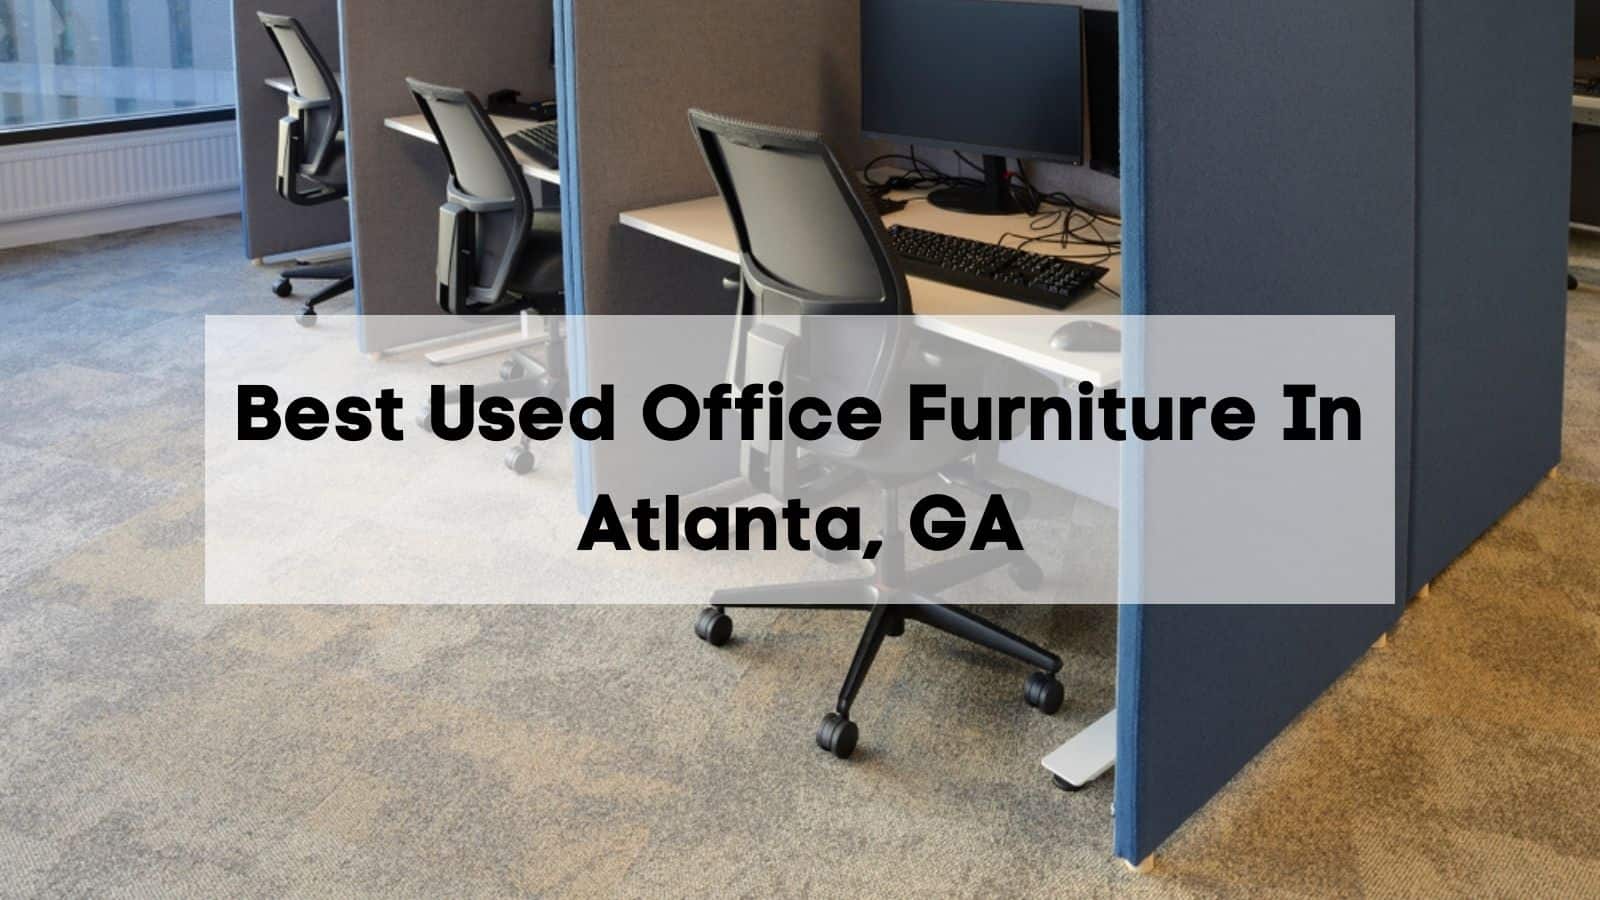 Best Used Office Furniture In Atlanta, GA